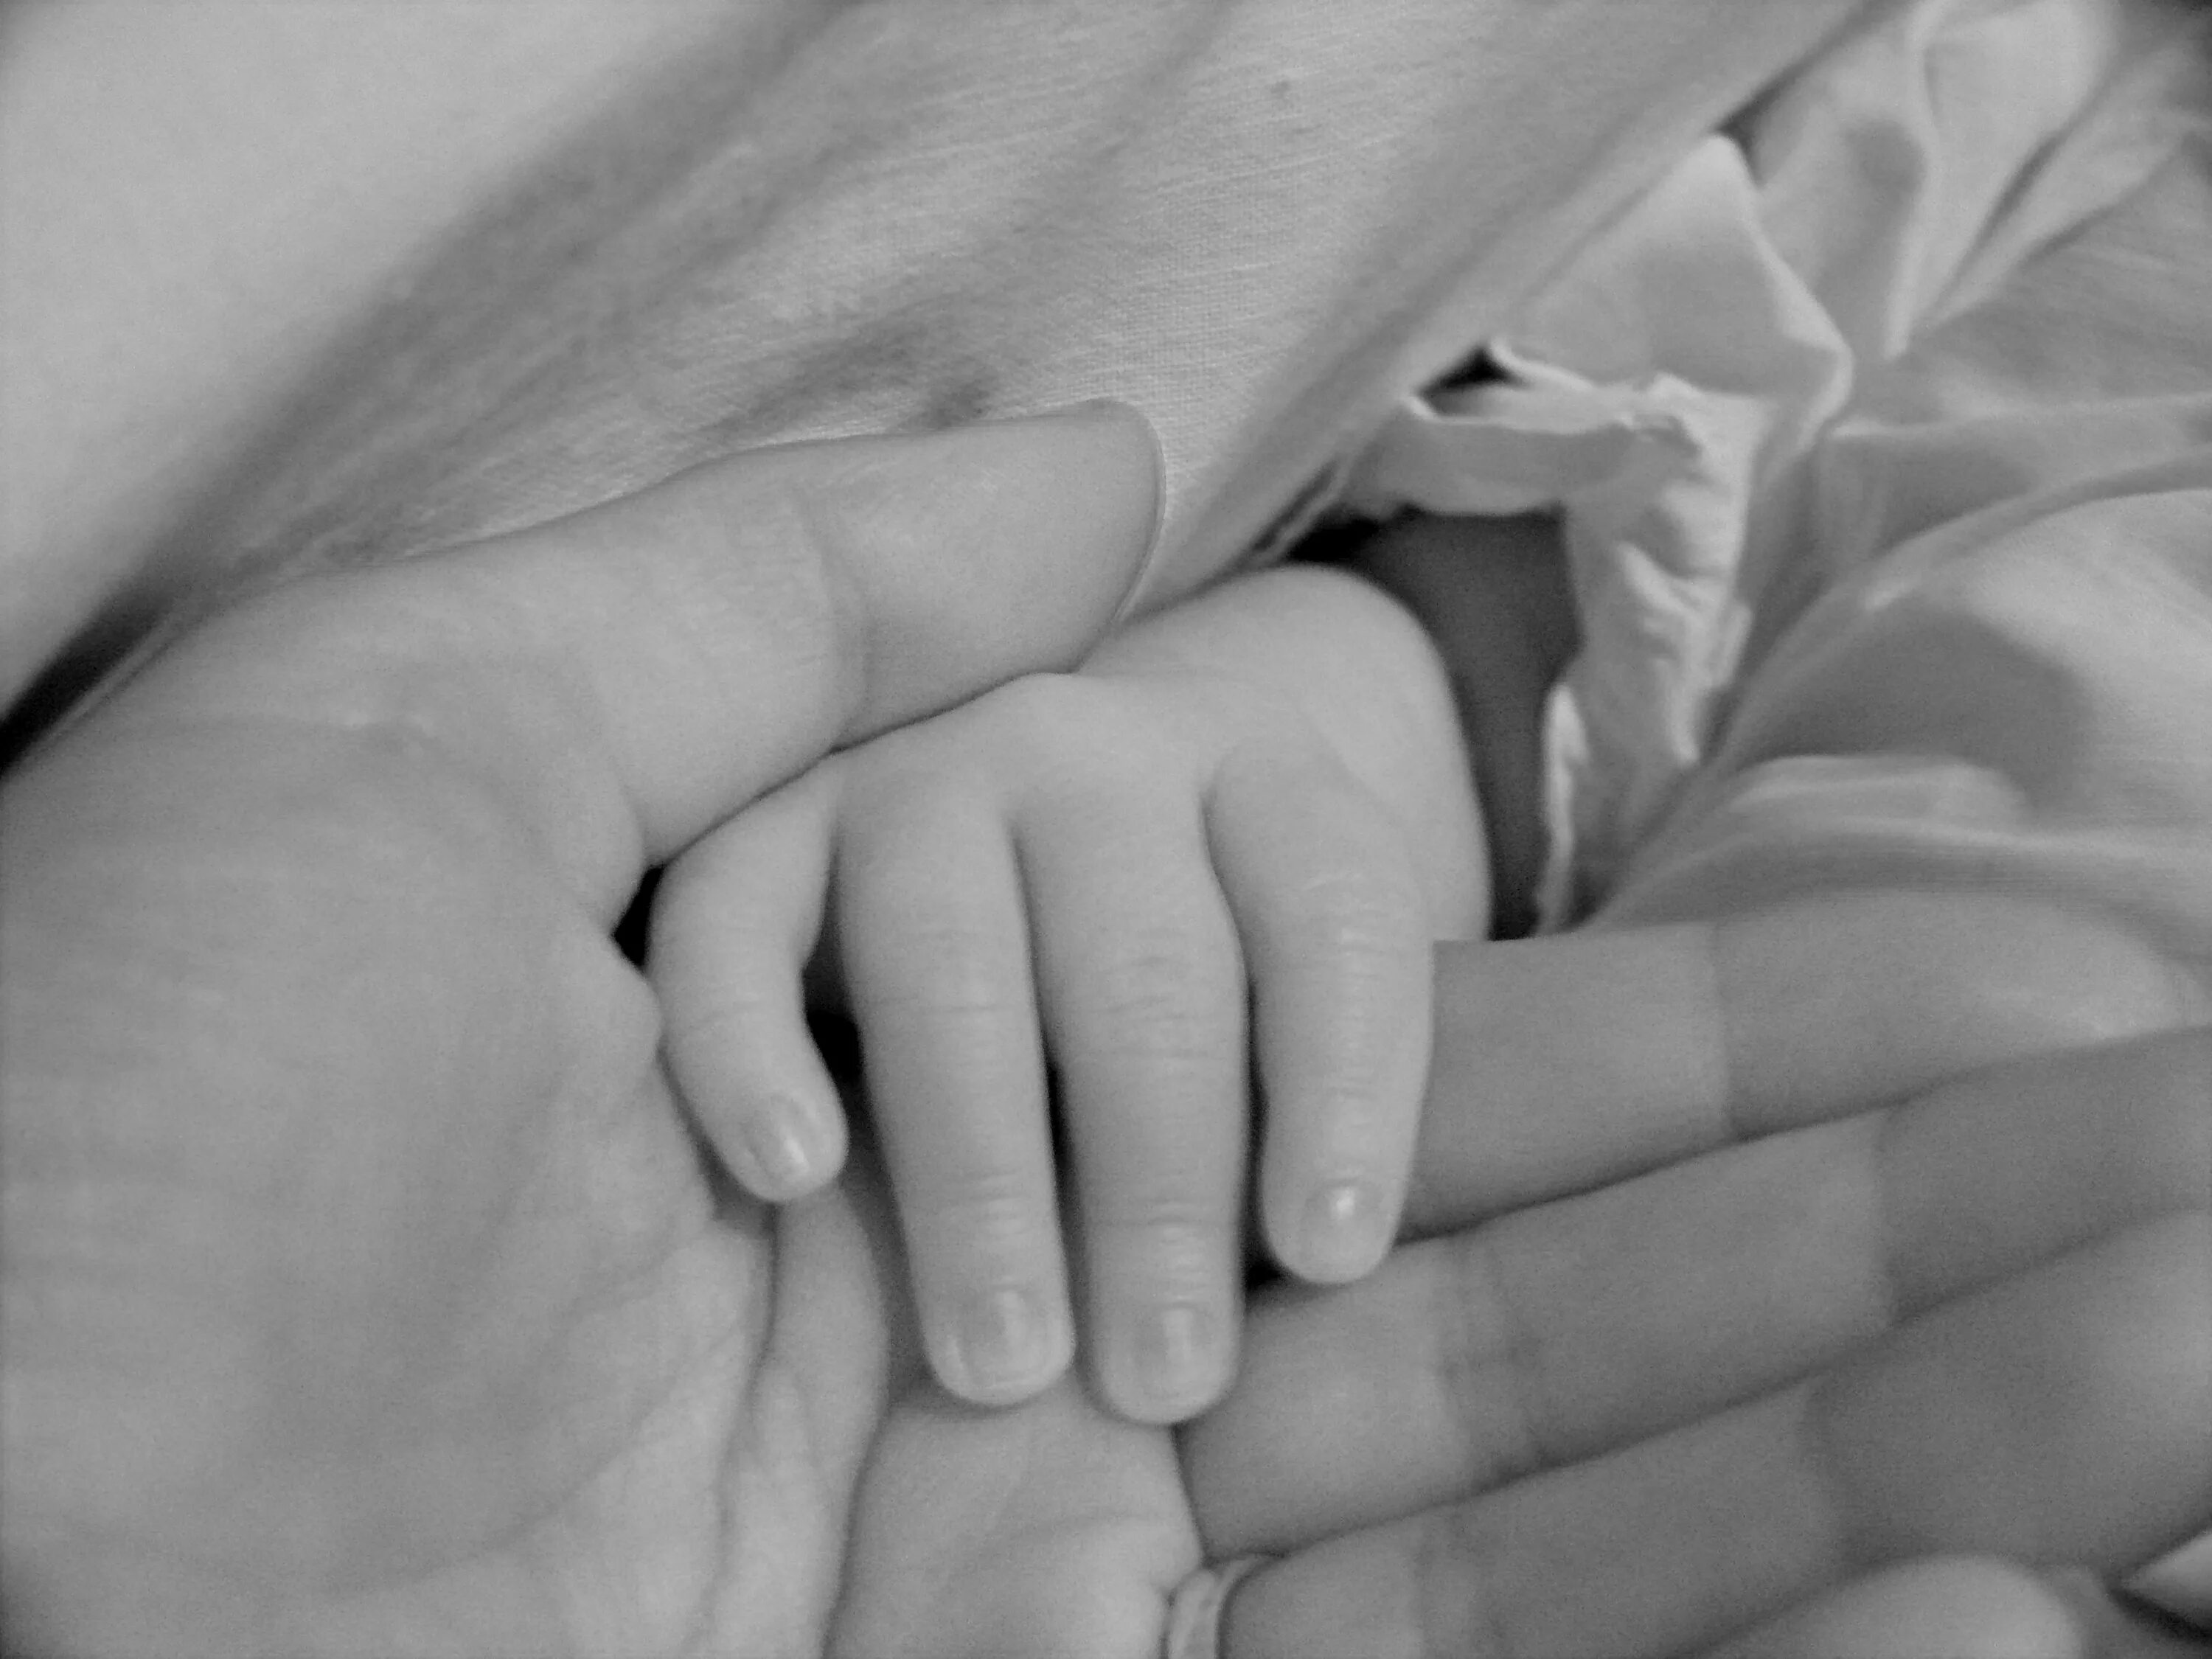 Рука младенца в руке. Мать с ребёнком на руках. Мама с малышом на руках. Мать с младенцем на руках. Новорожденный без мамы